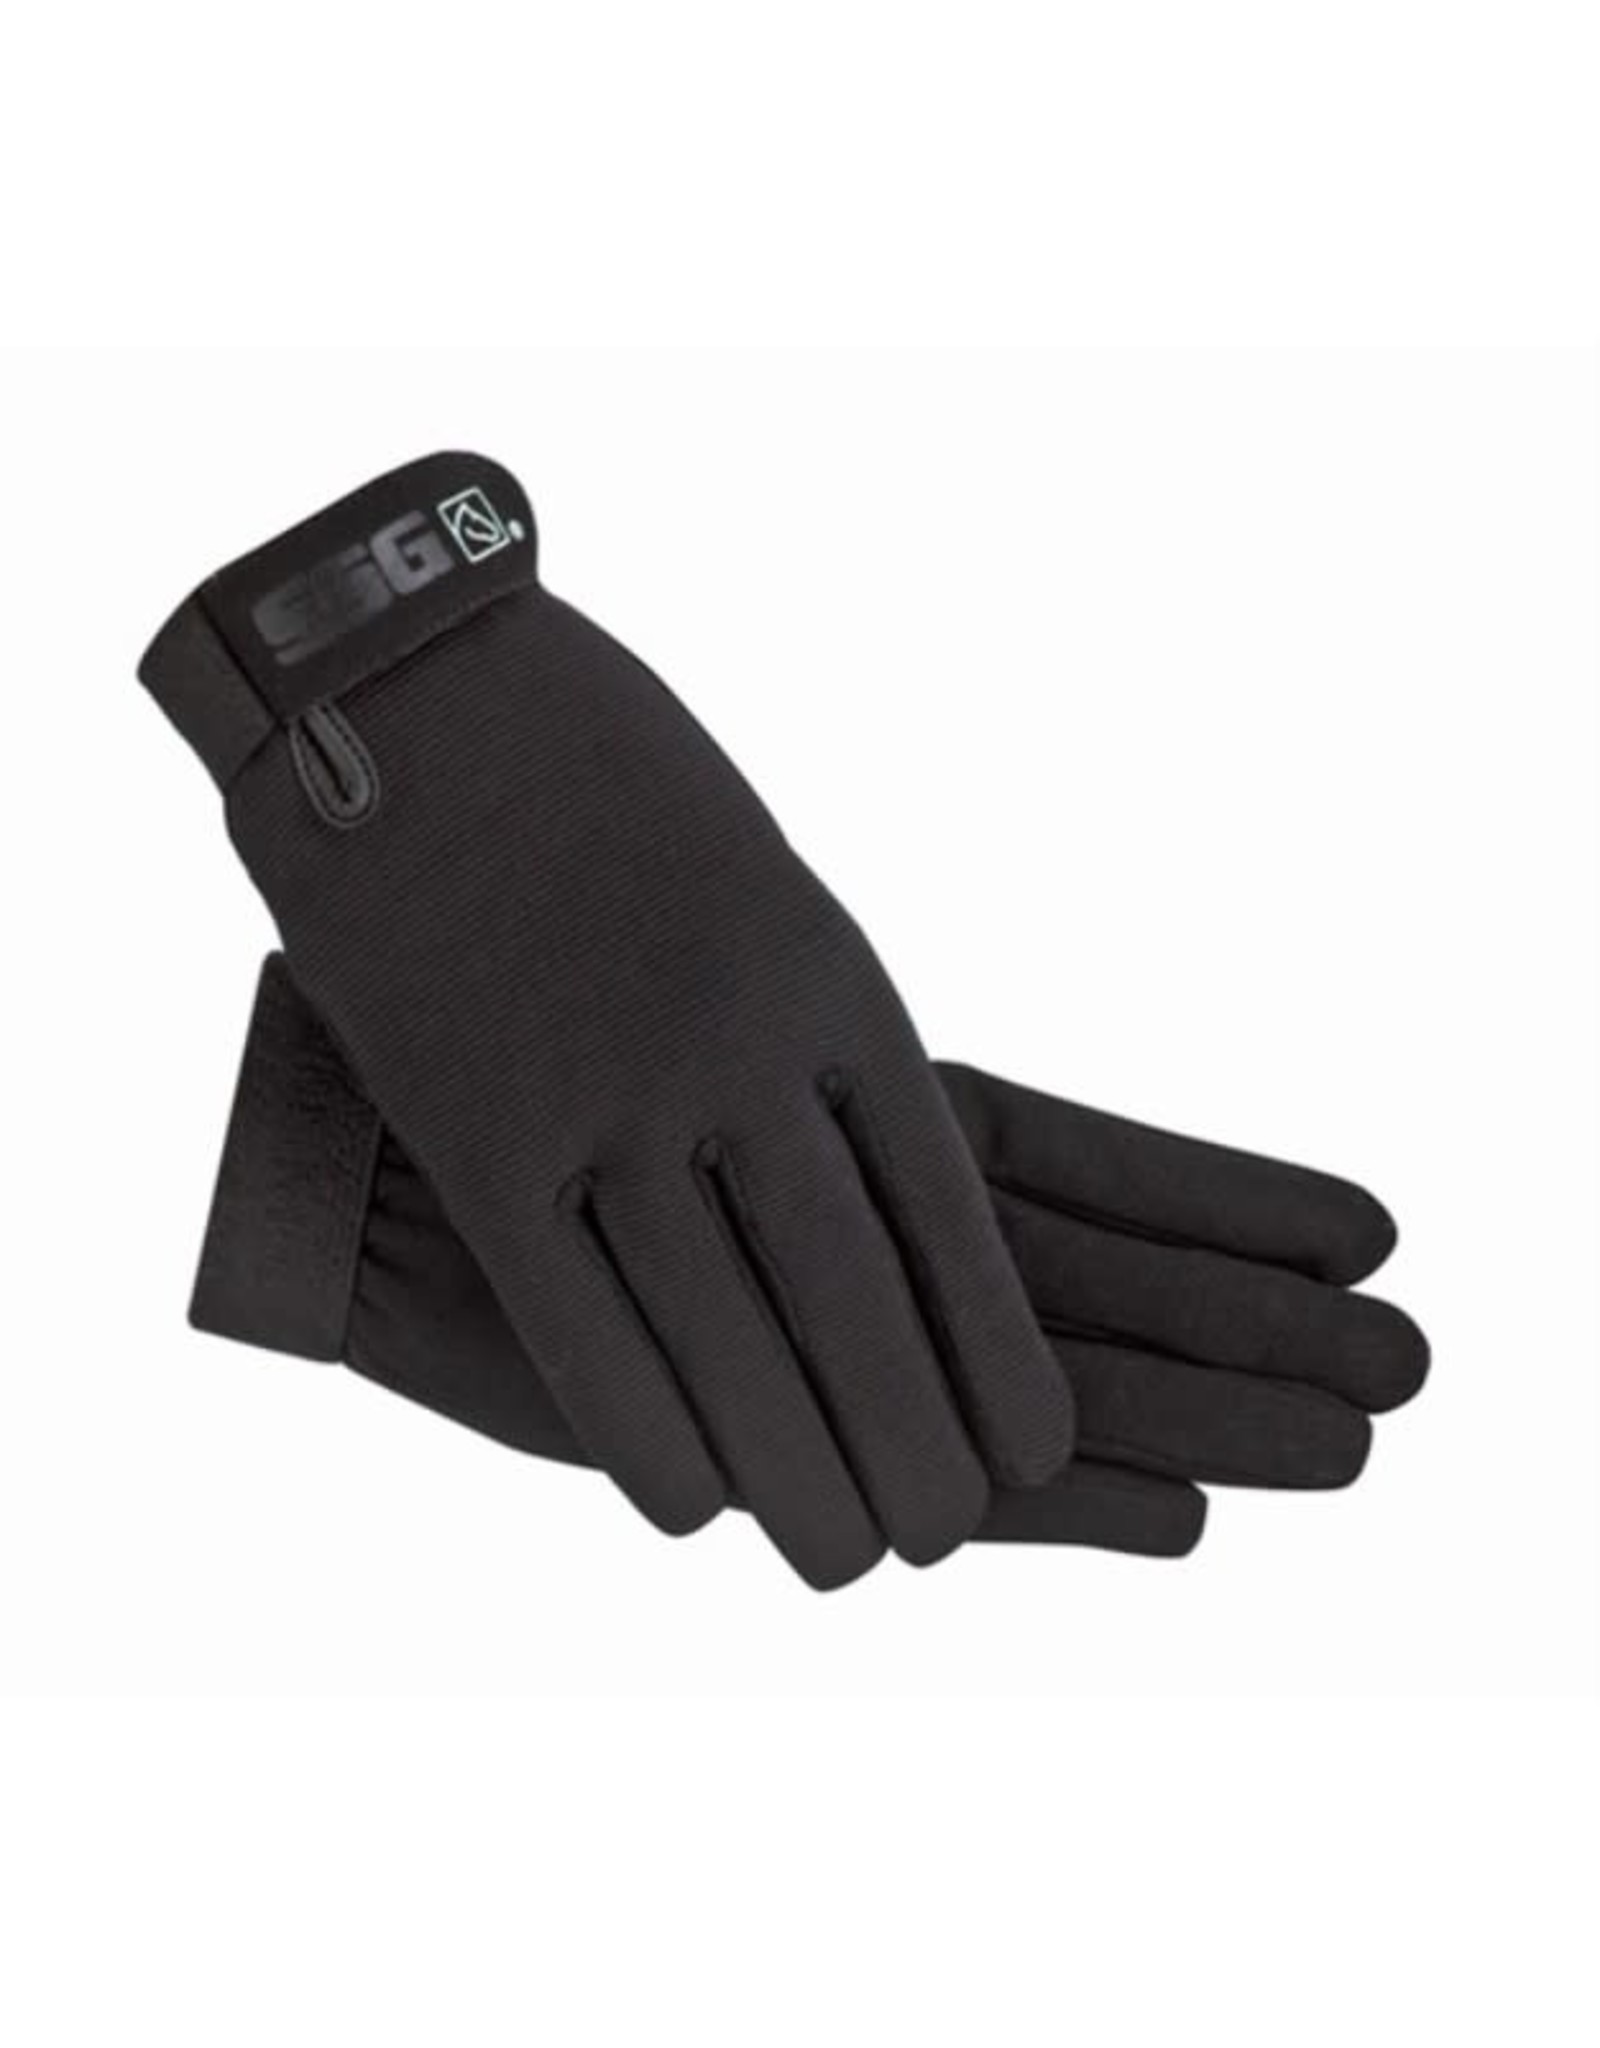 SSG Gloves SSG All Weather Black